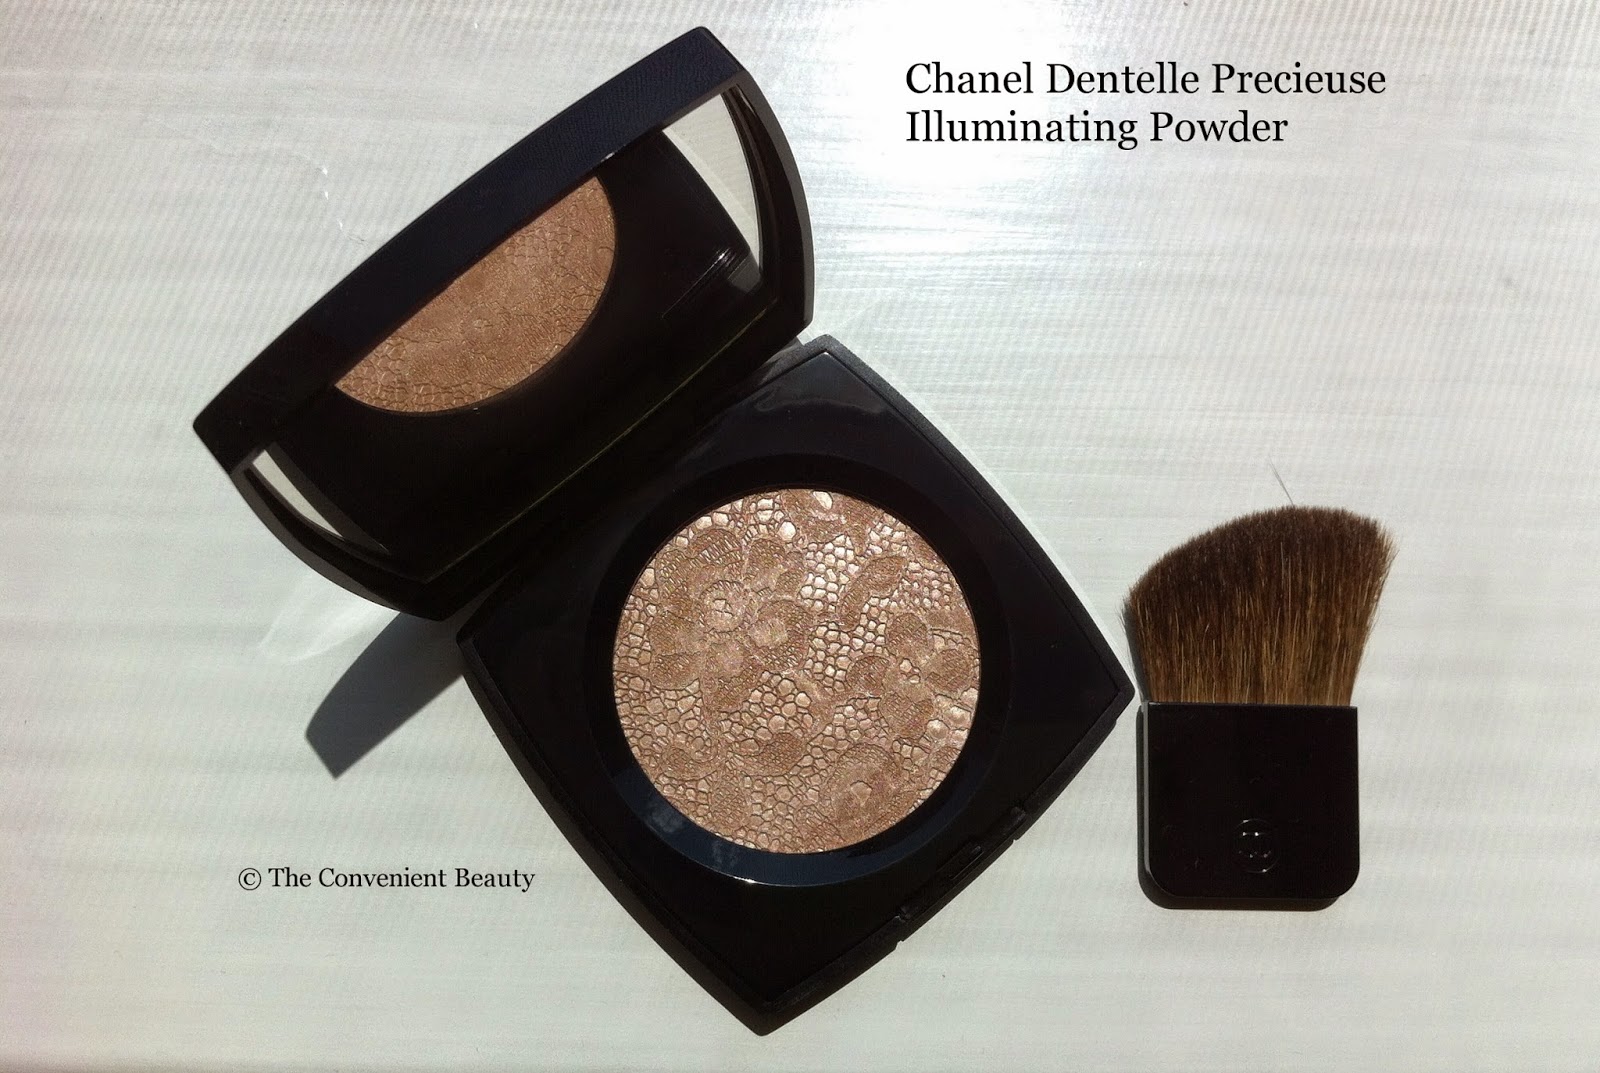 The Convenient Beauty: Review: Chanel Dentelle Precieuse Illuminating Powder